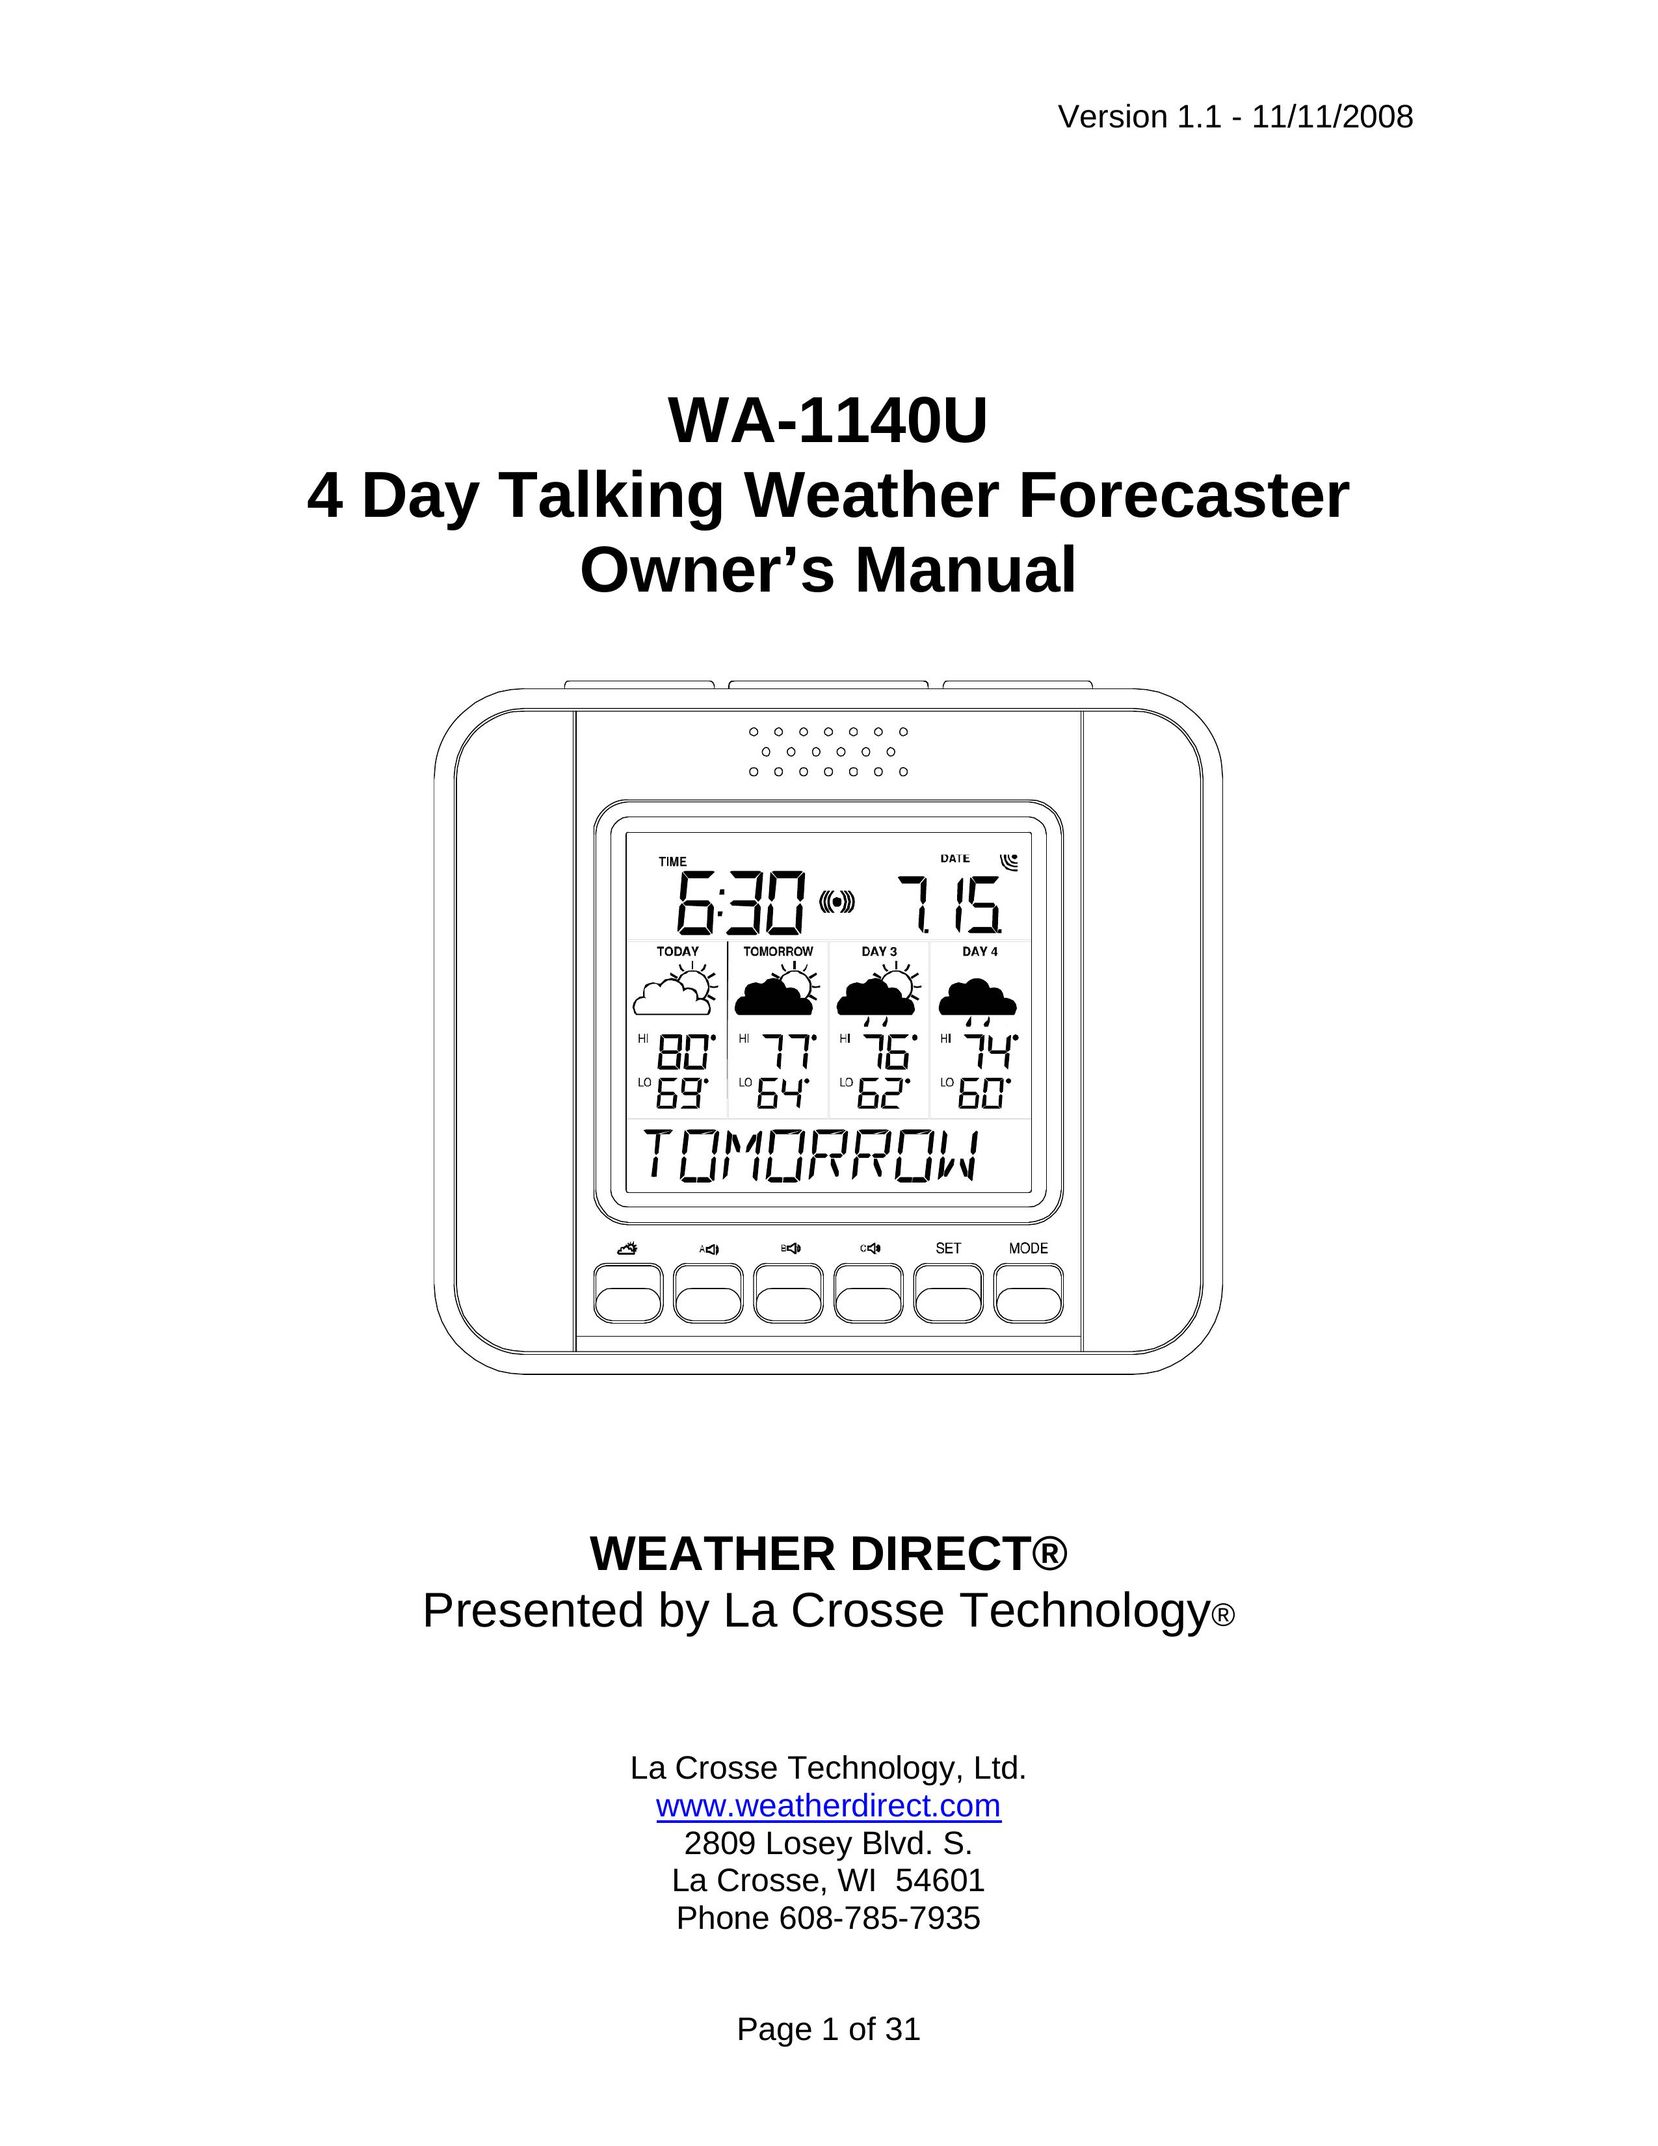 La Crosse Technology WA-1140U Portable Radio User Manual